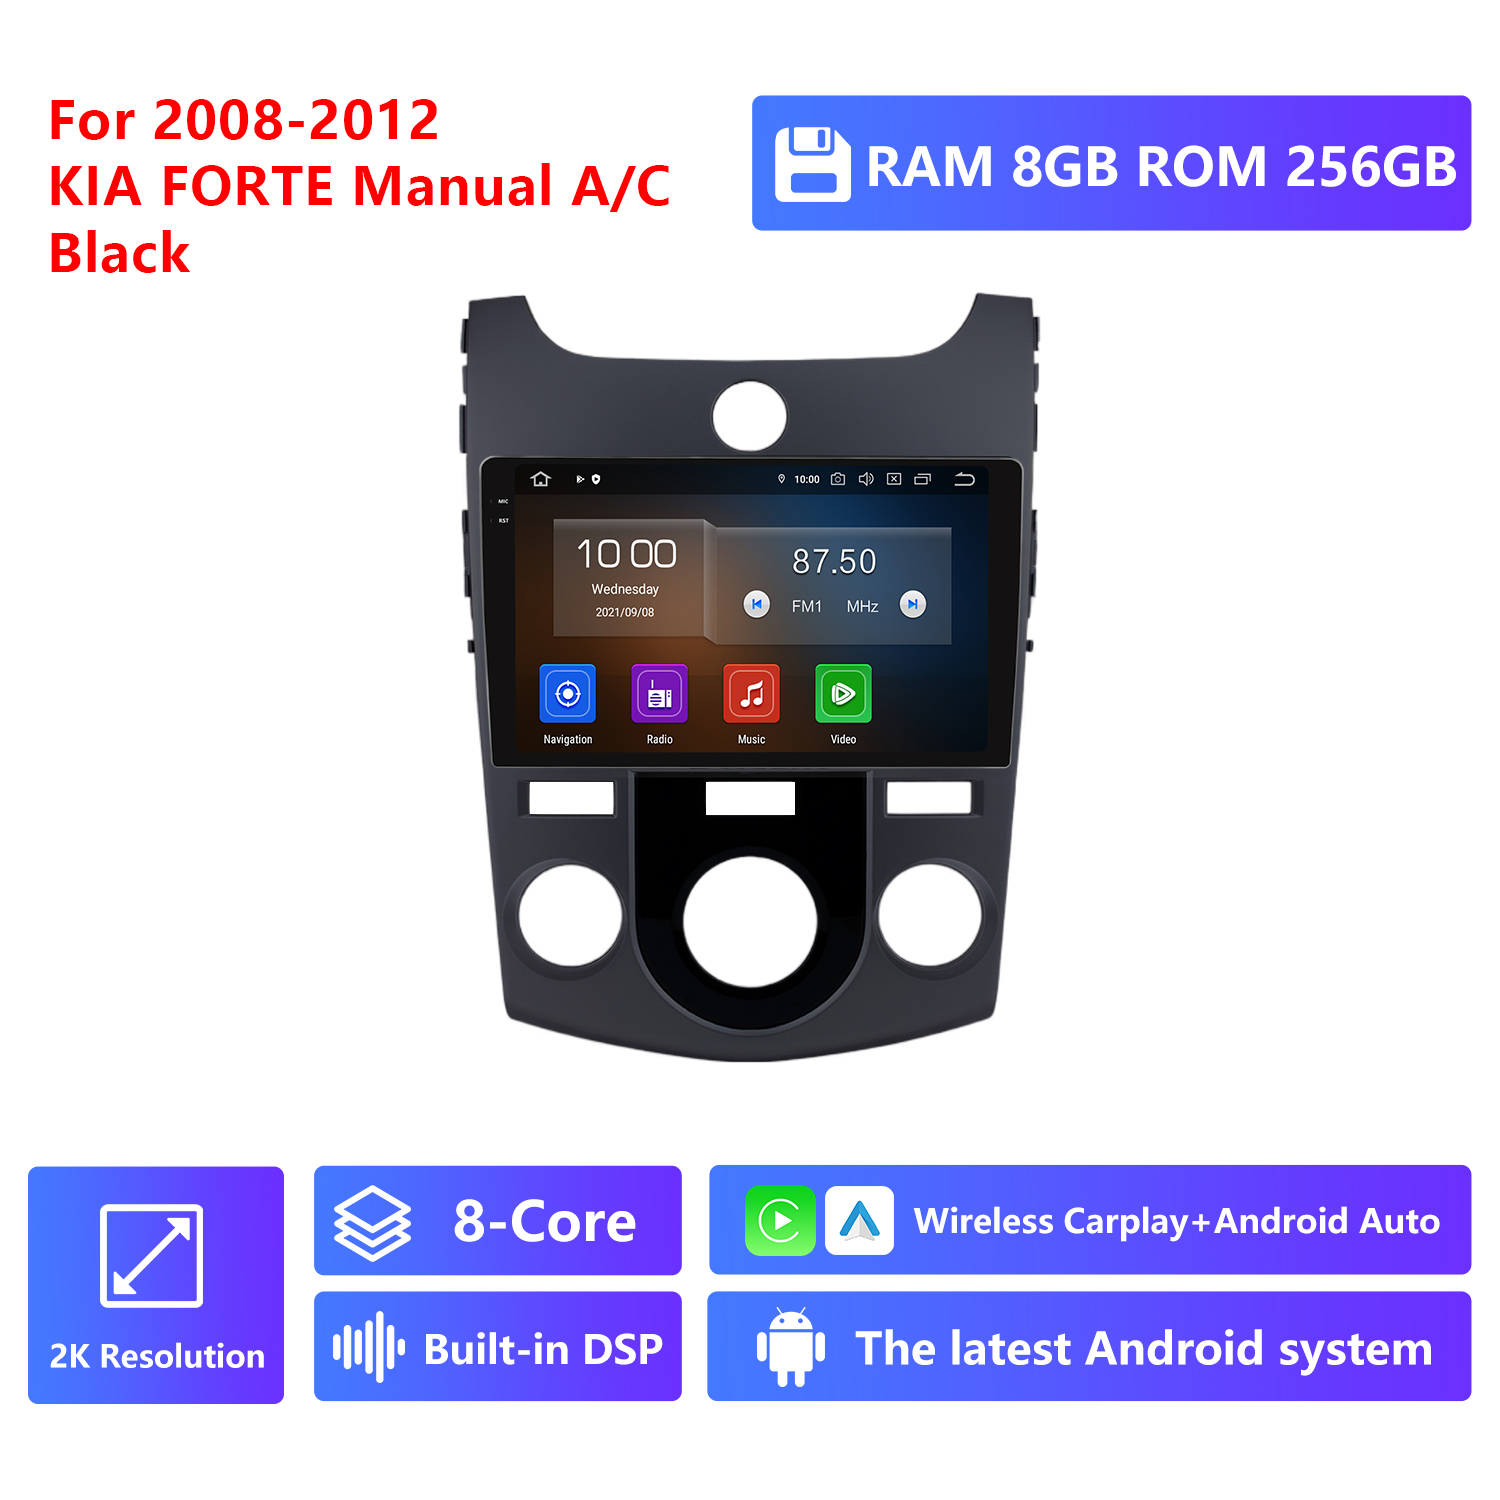 RAM 8G,ROM 256G 2K Resolution,Black